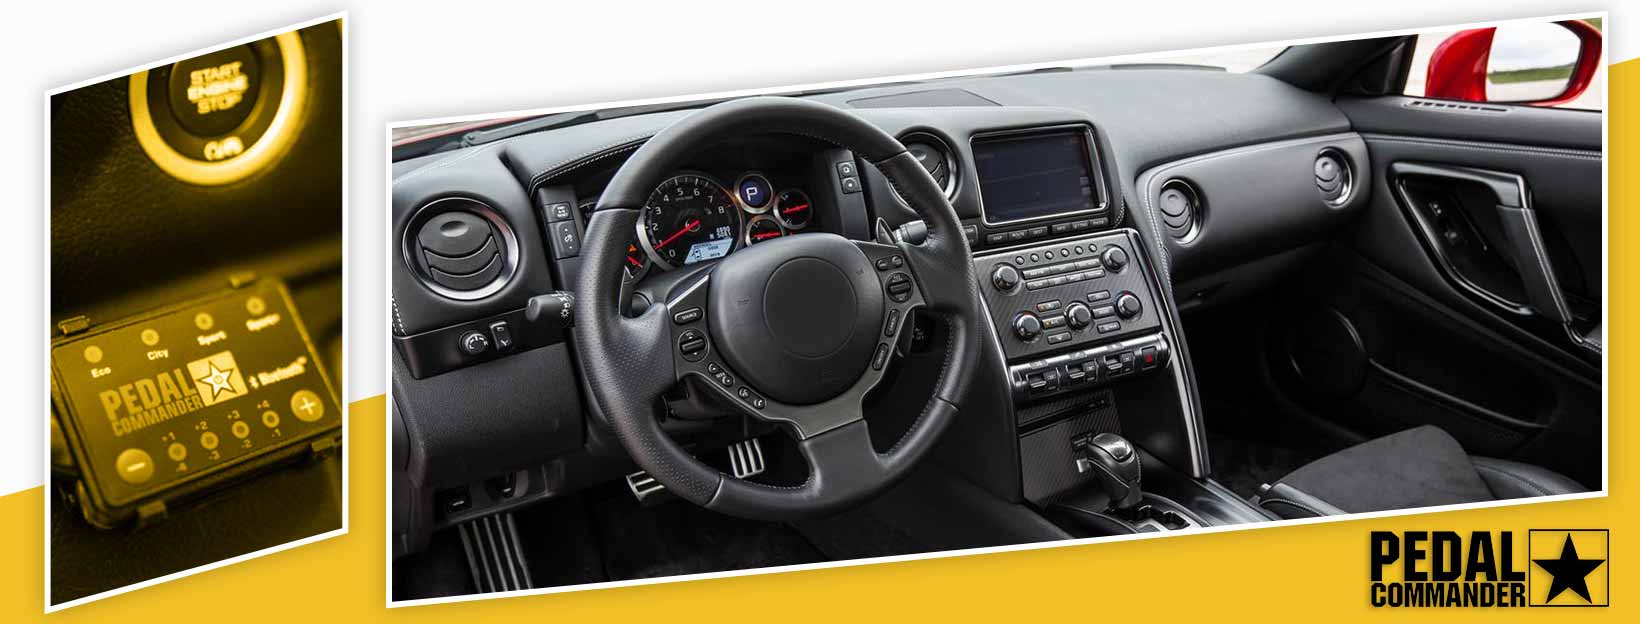 Pedal Commander for Nissan GTR - interior